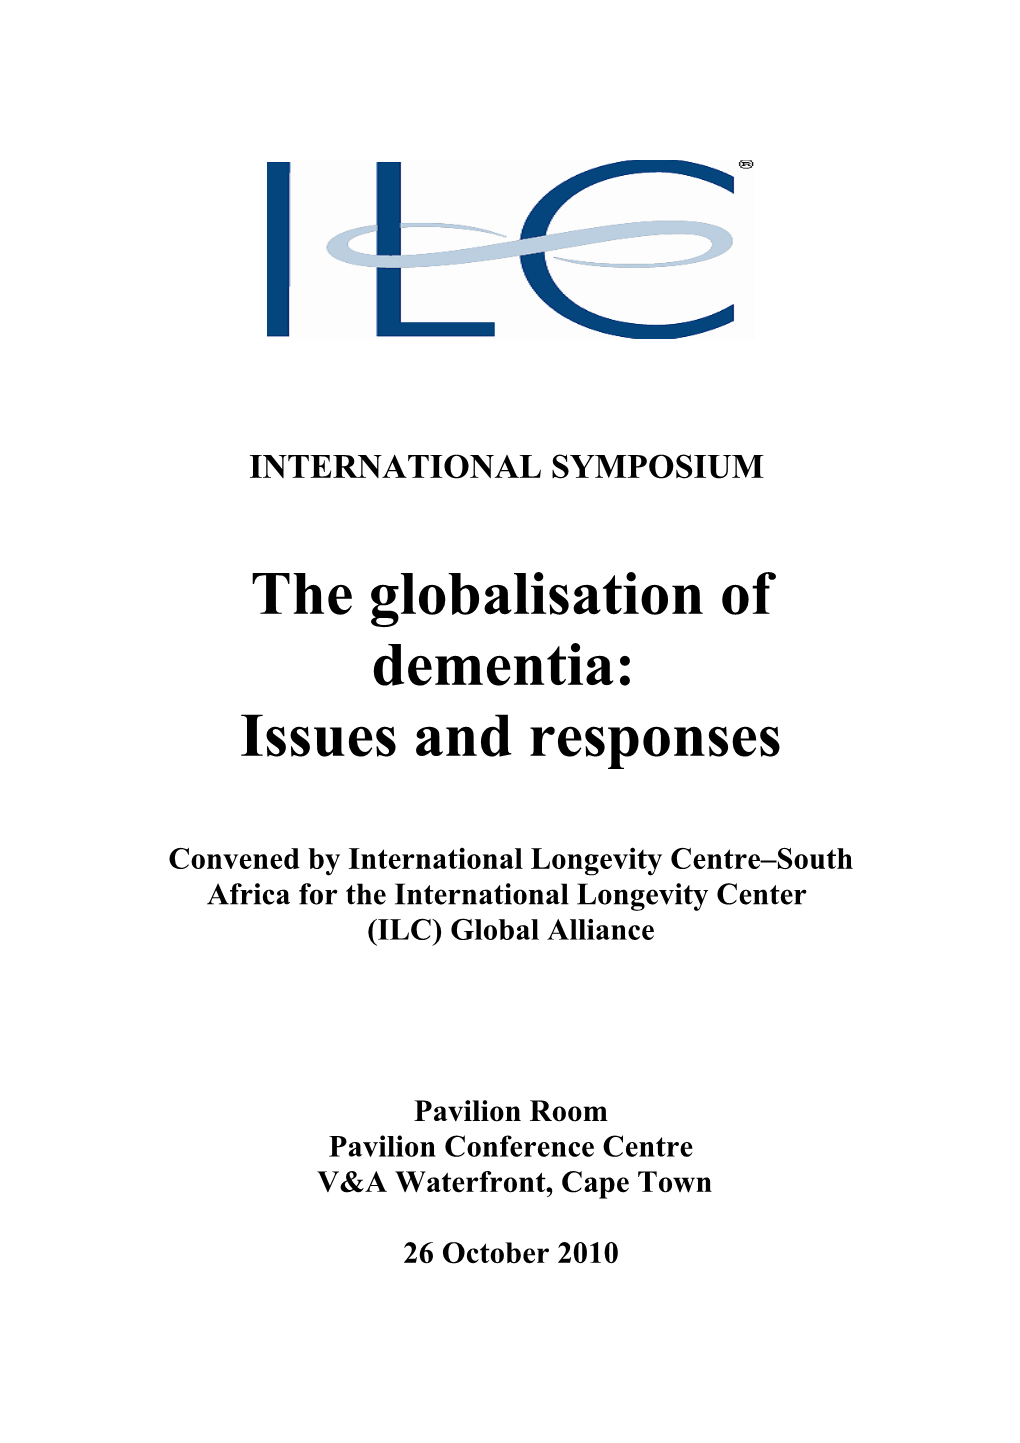 International Symposium on Dementia